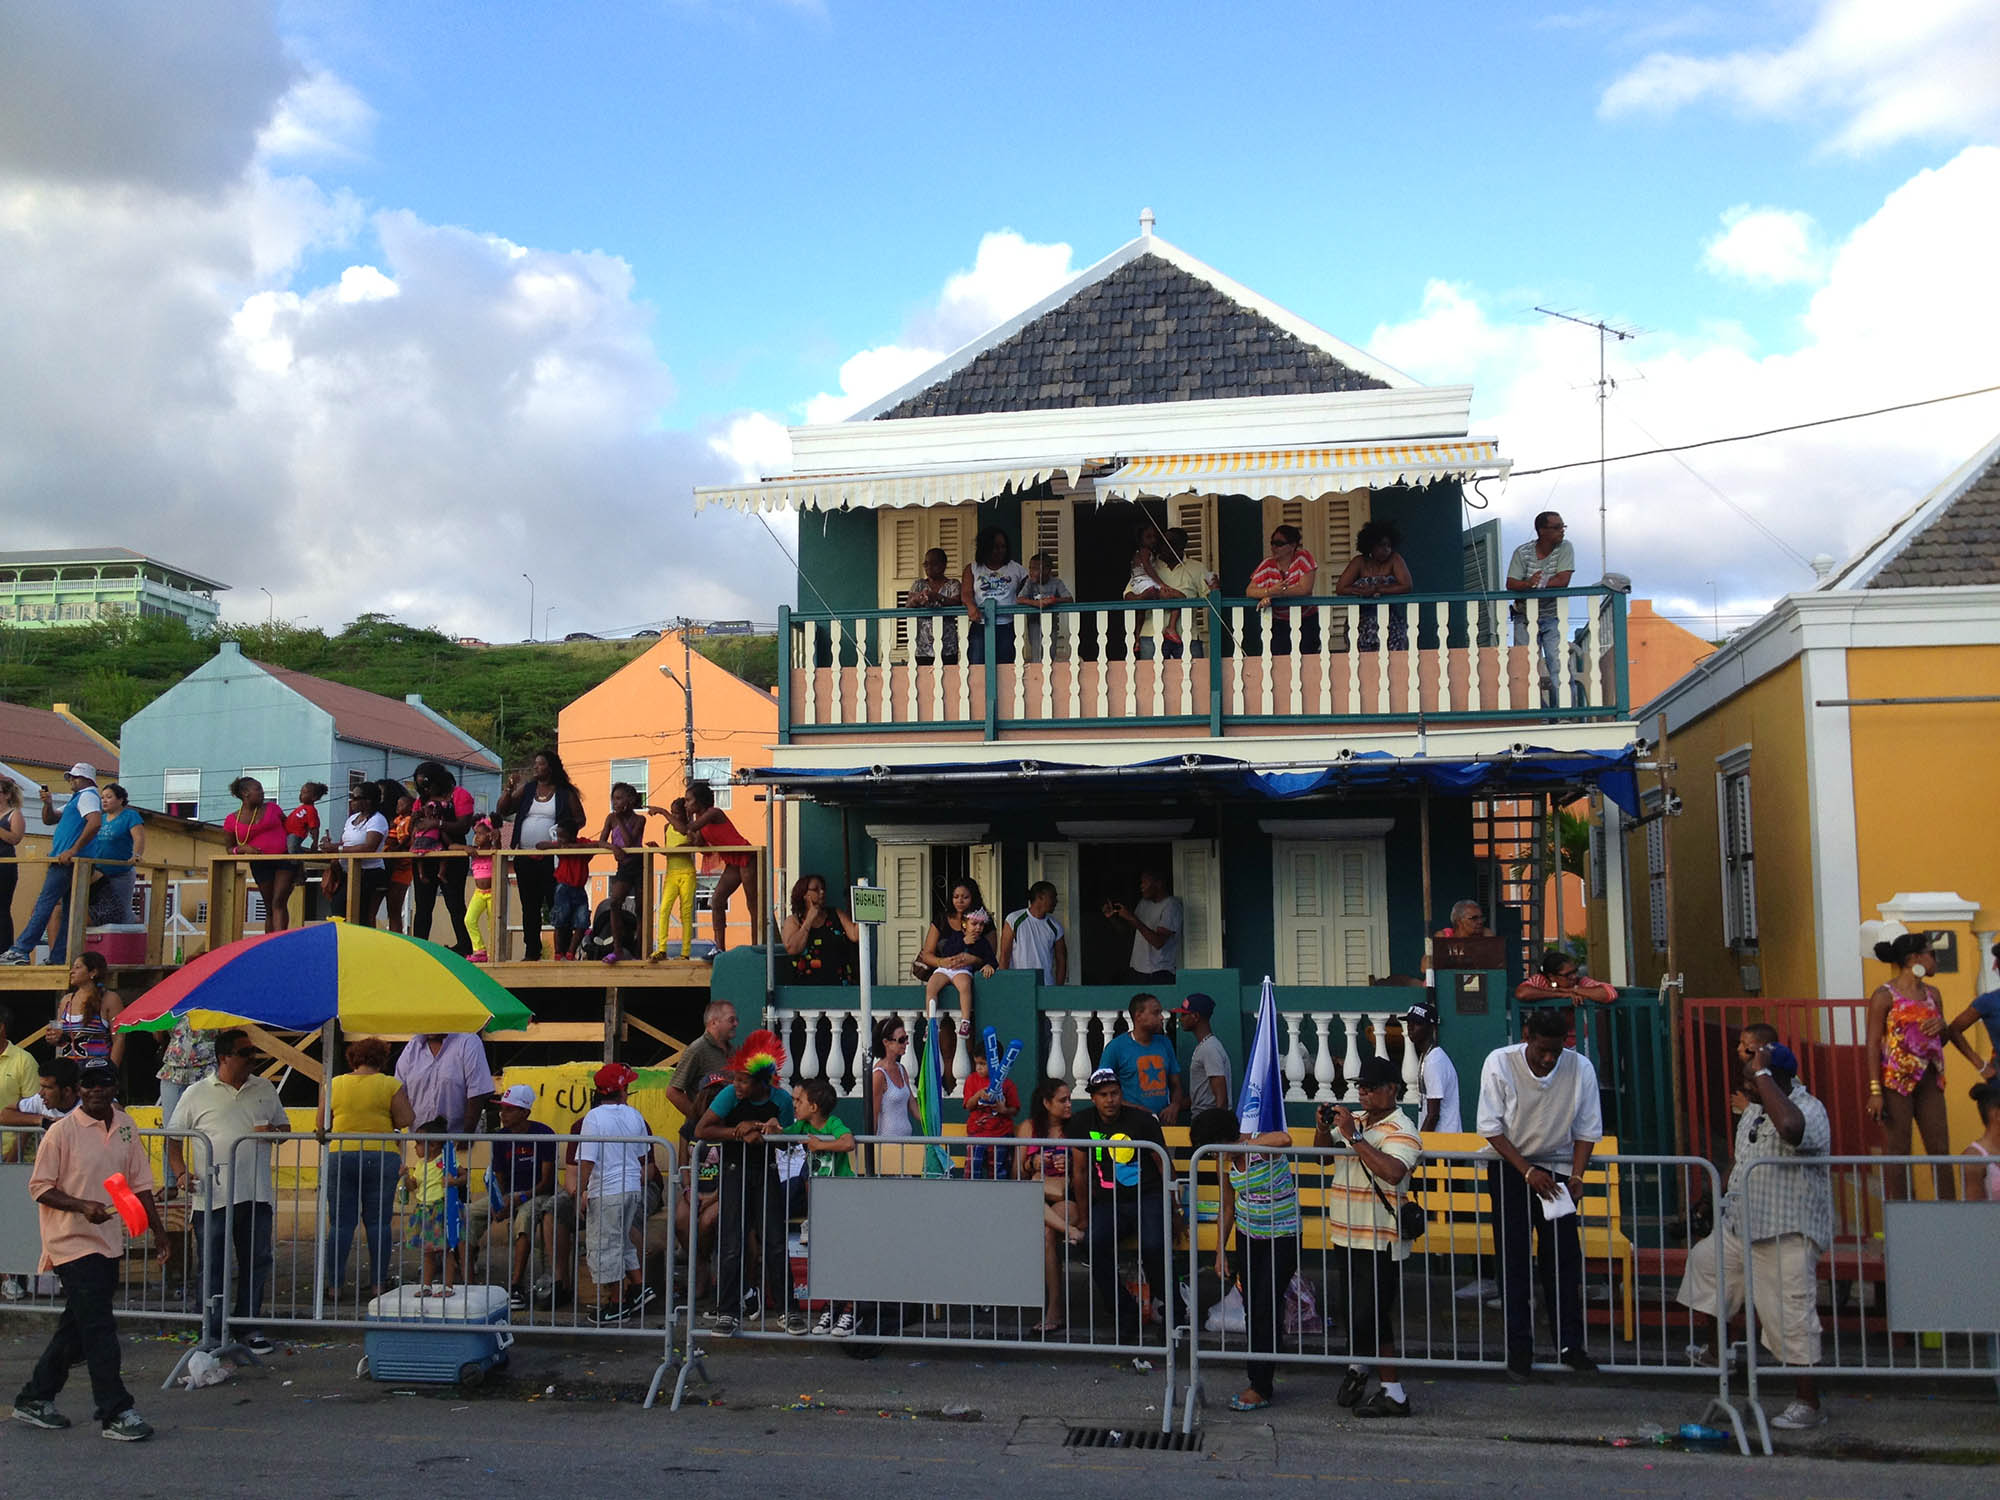 Overvolle balkons langs carnavalsroute pas echt risico’